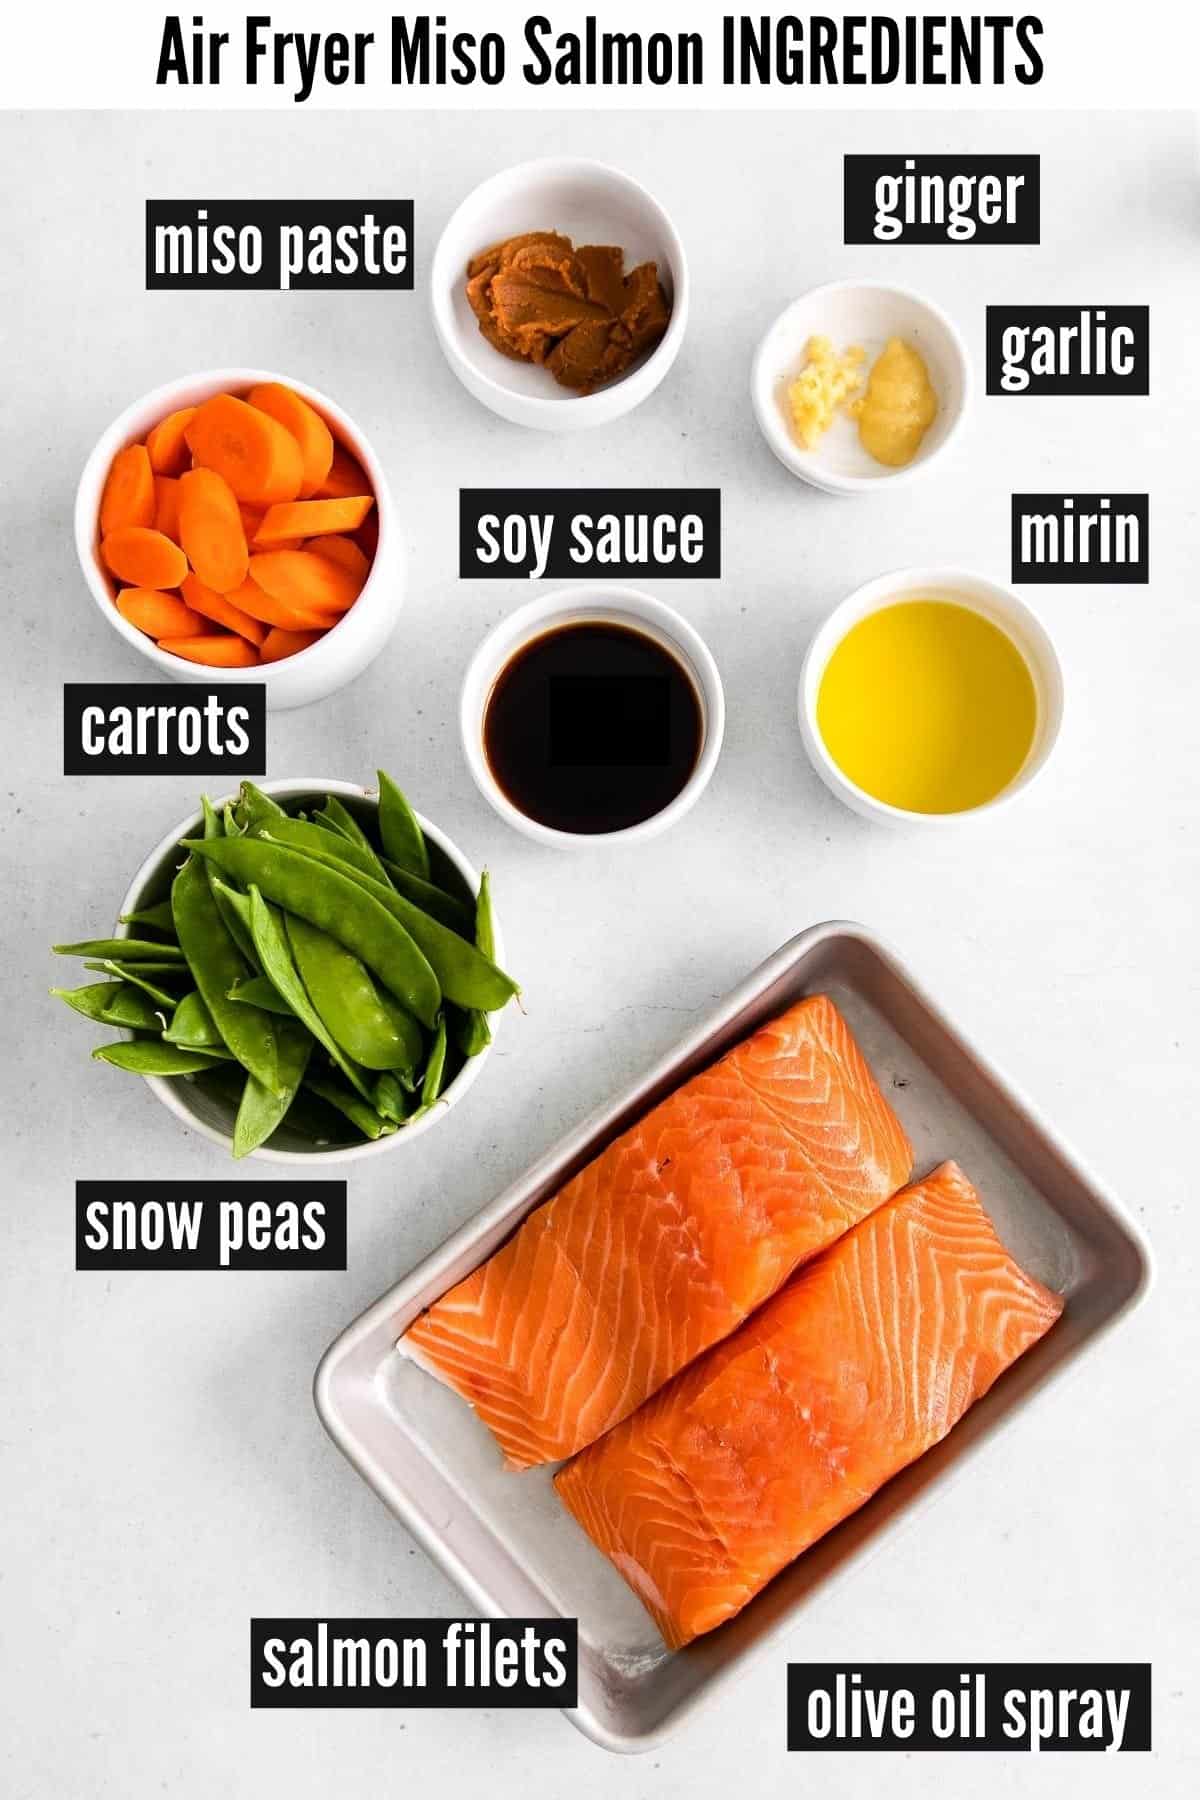 air fryer miso salmon labelled ingredients